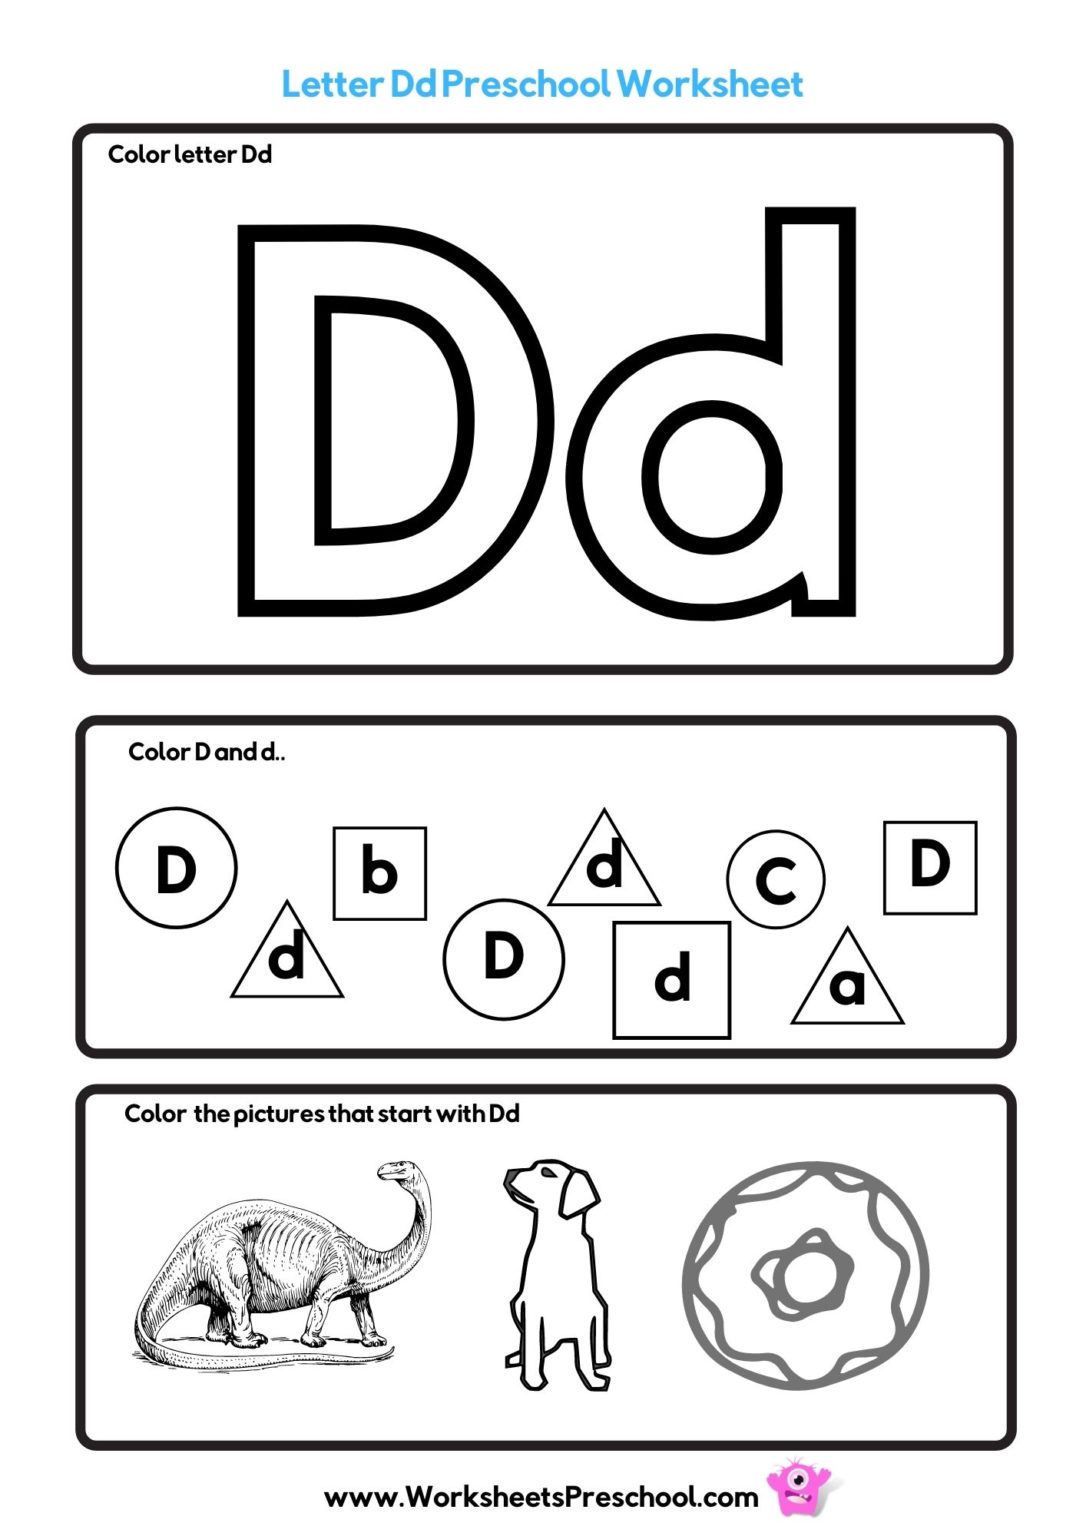 letter-d-worksheets-for-preschool-4-free-printable-pdfs